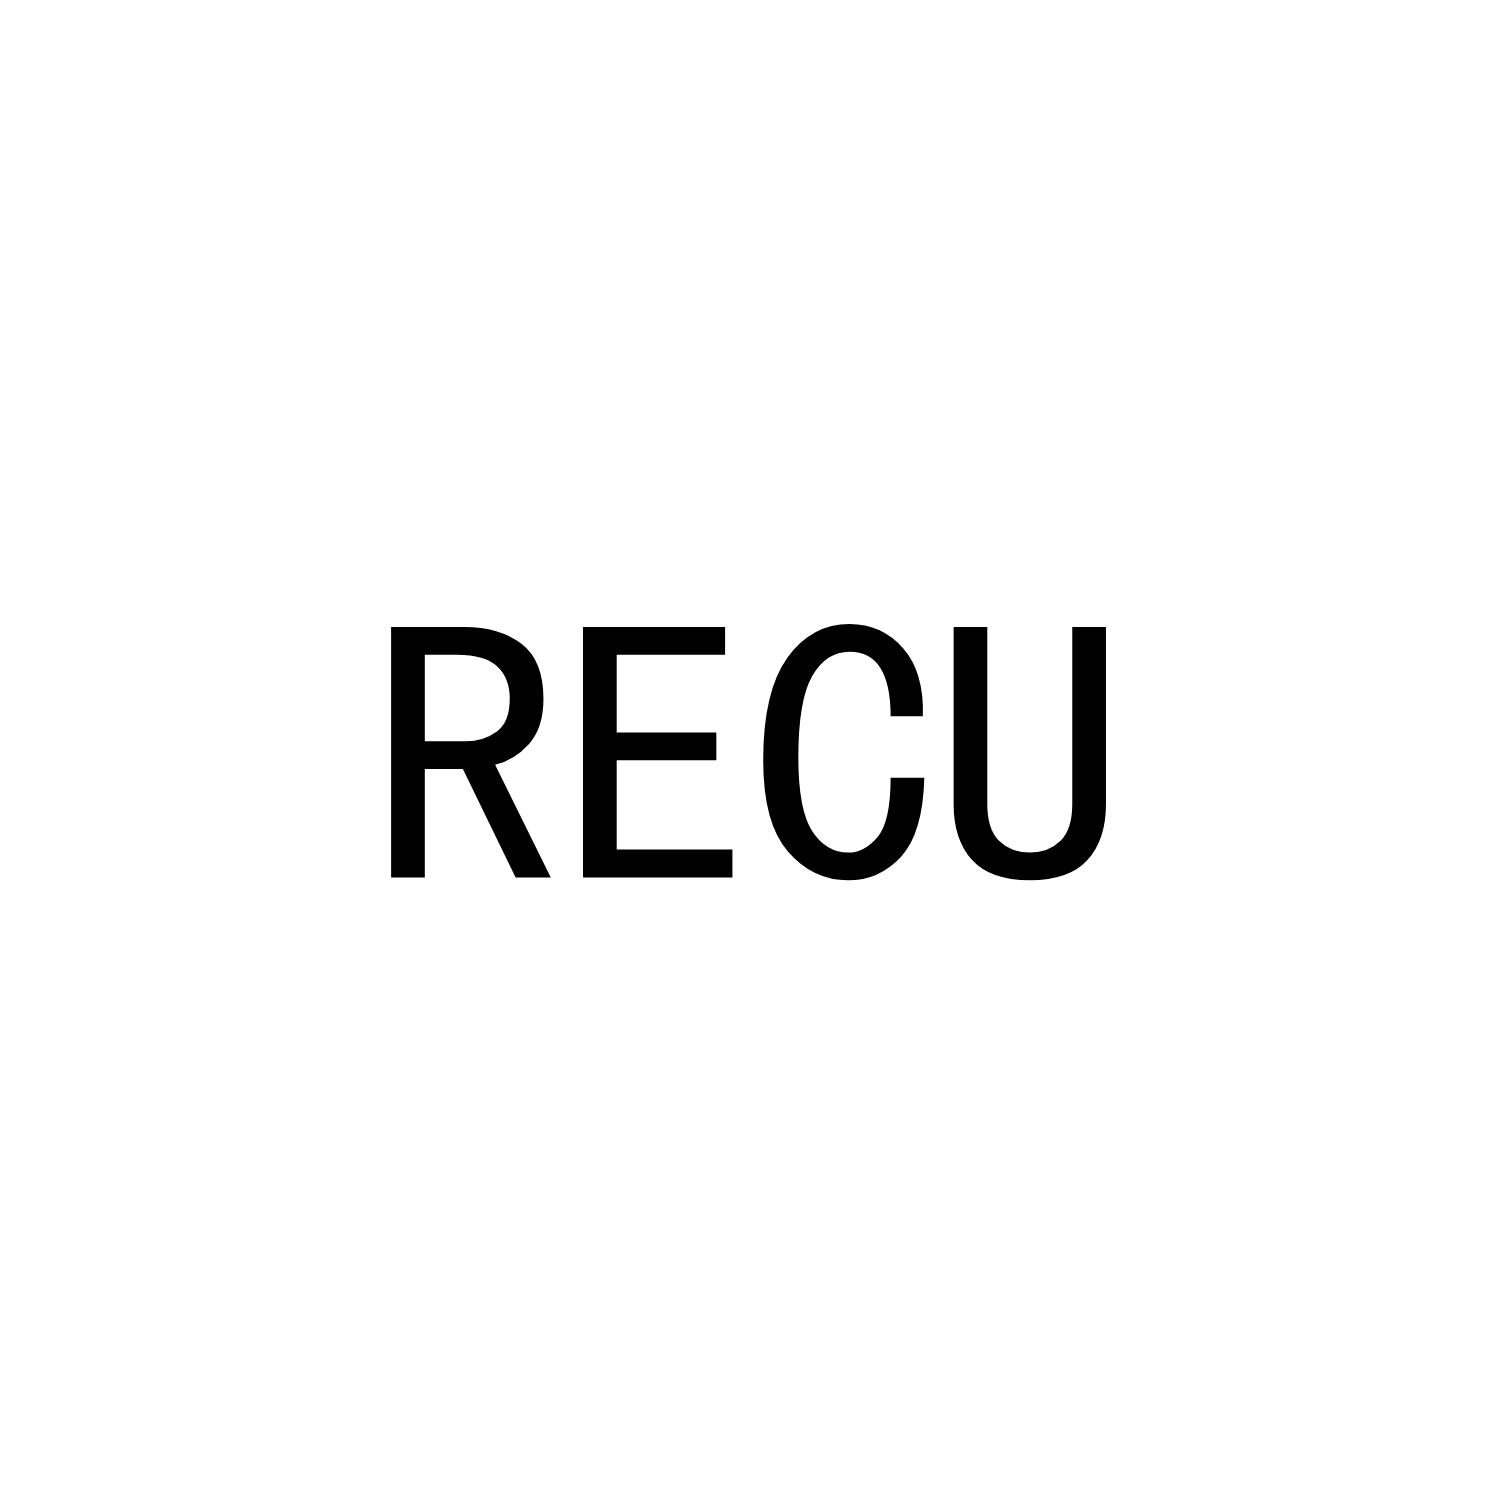 RECU商标转让